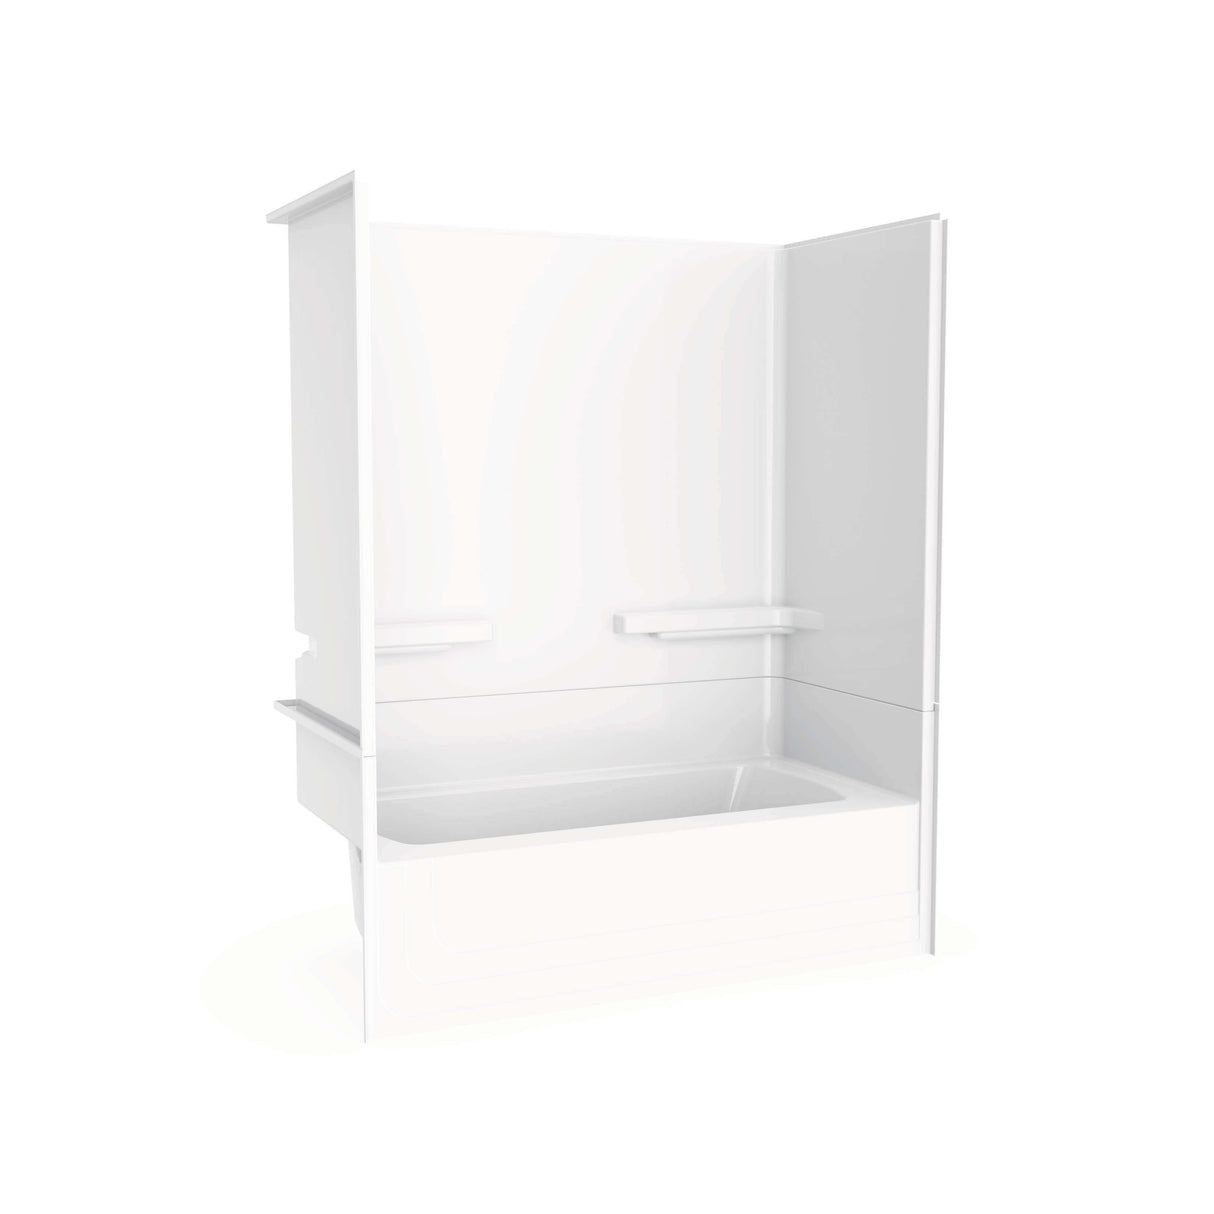 MAAX 101175-000-002-001 Monaco 60 x 31 AcrylX Alcove Left-Hand Drain Two-Piece Tub Shower in White